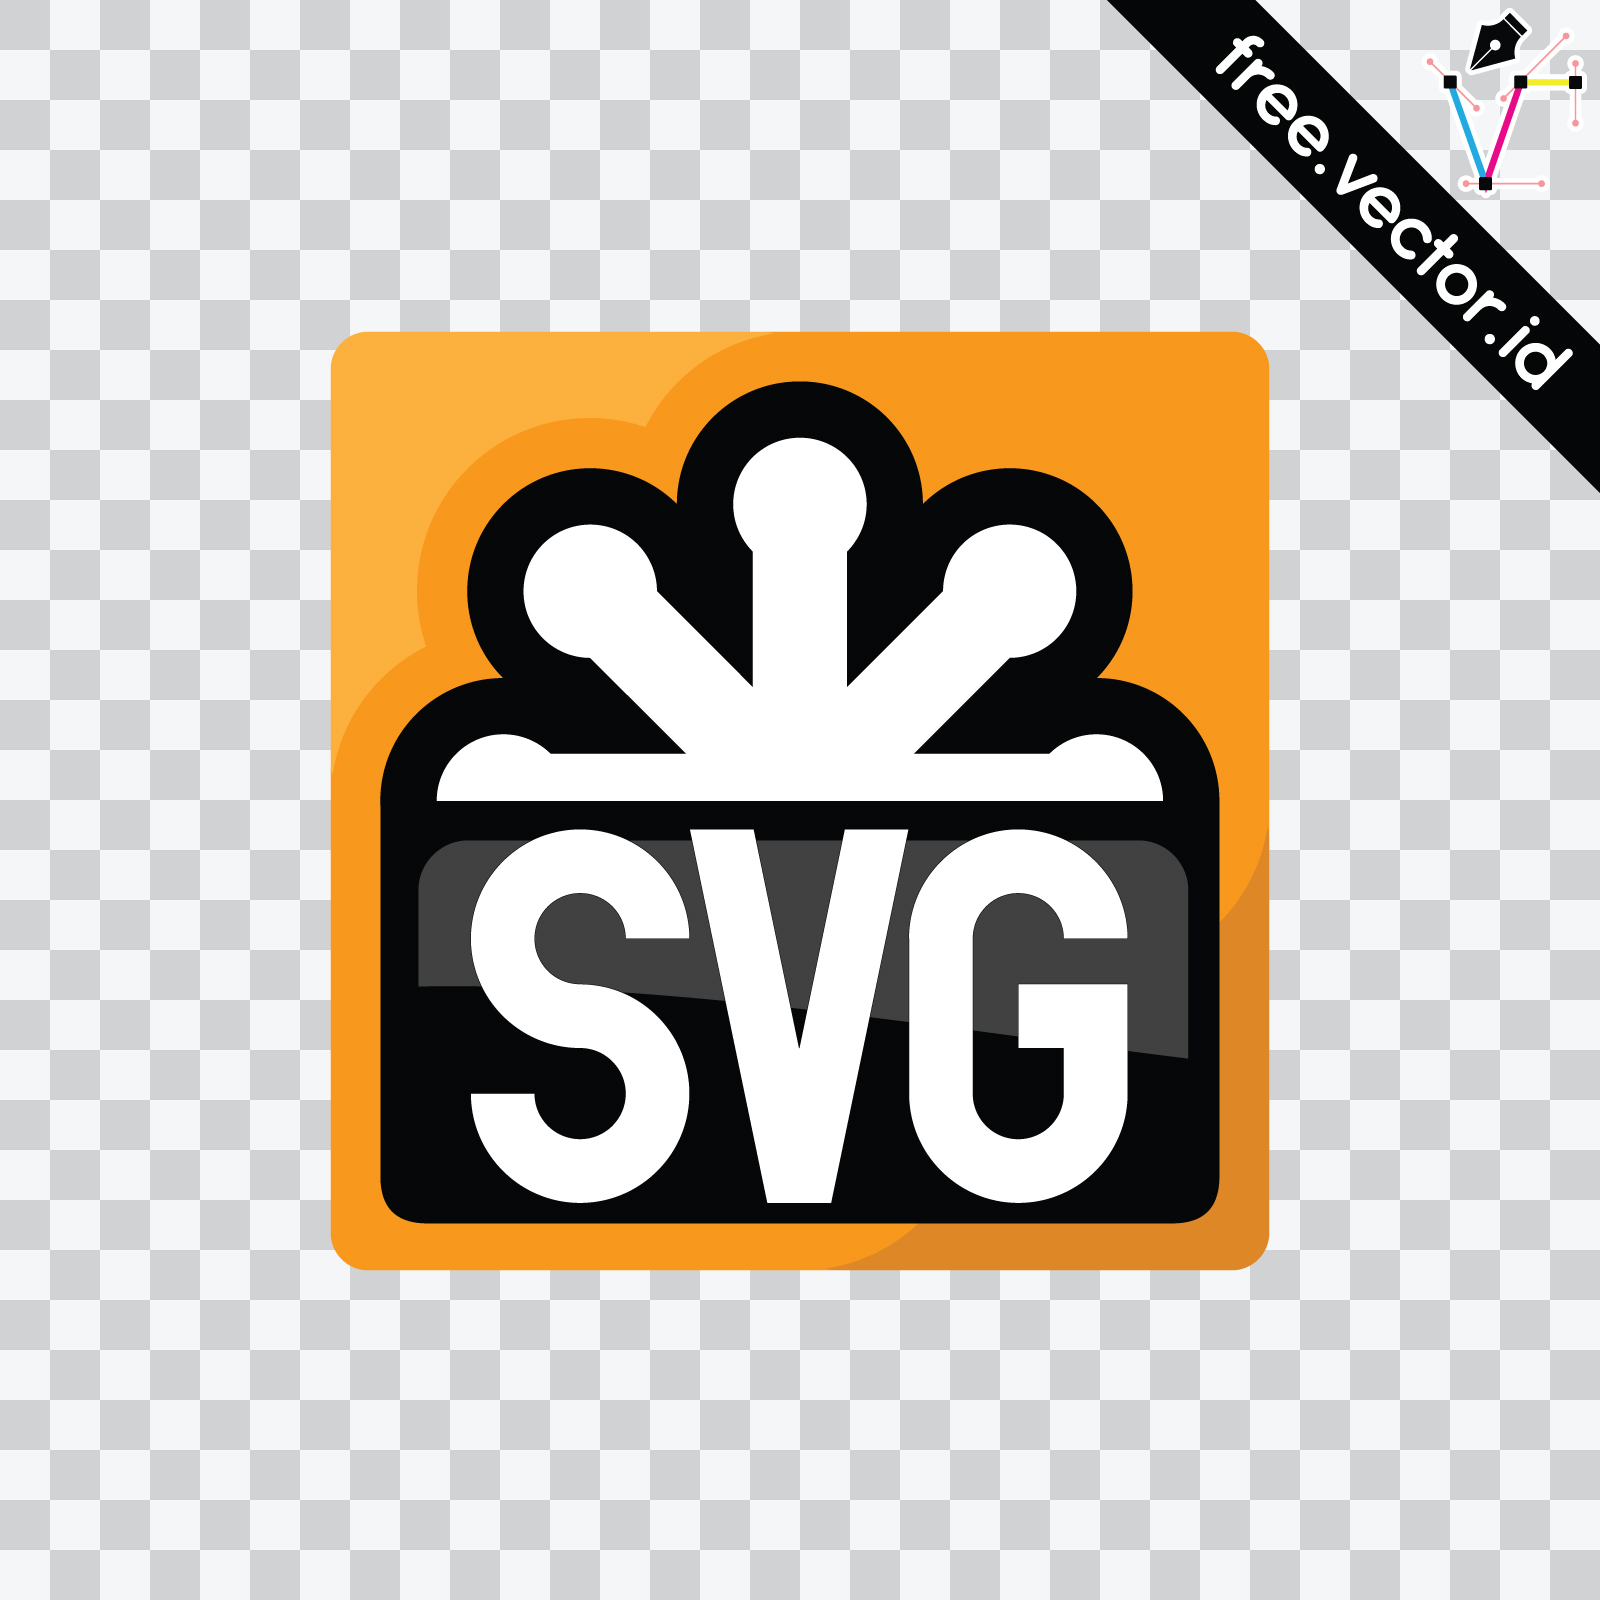 As Logo SVG